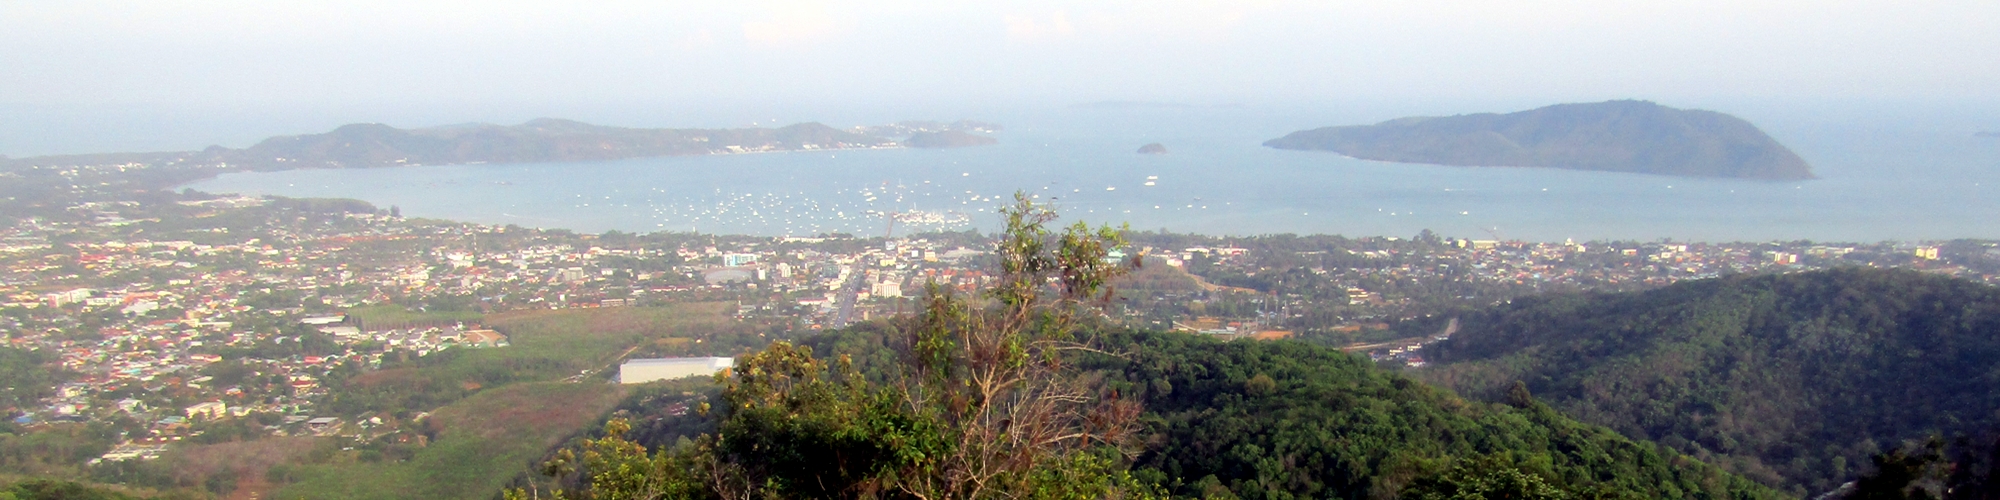 View from Big Buddha Phuket, Mueang Phuket District